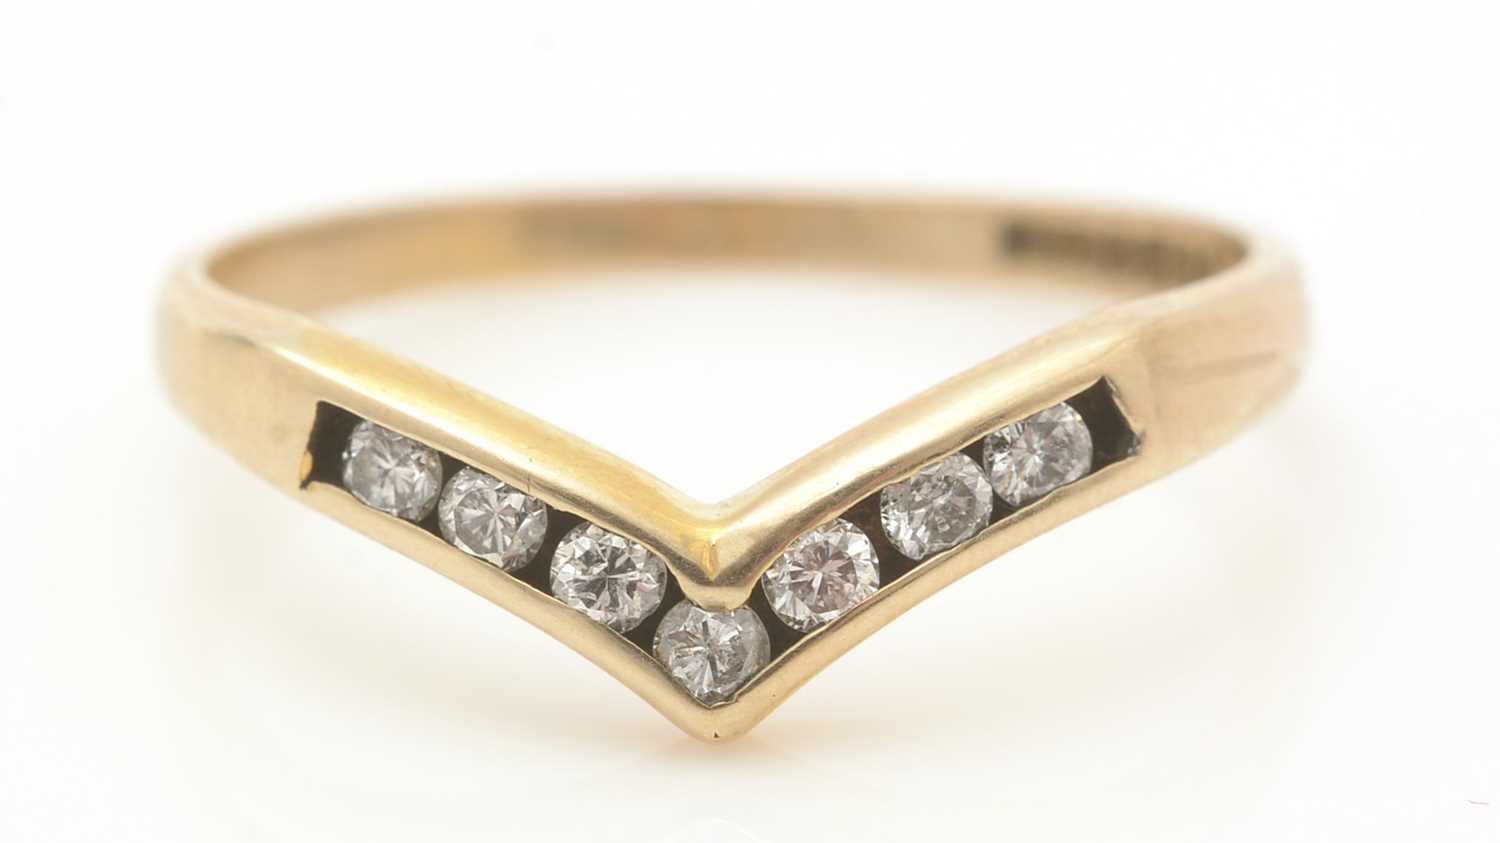 Lot 395 - A diamond wishbone ring